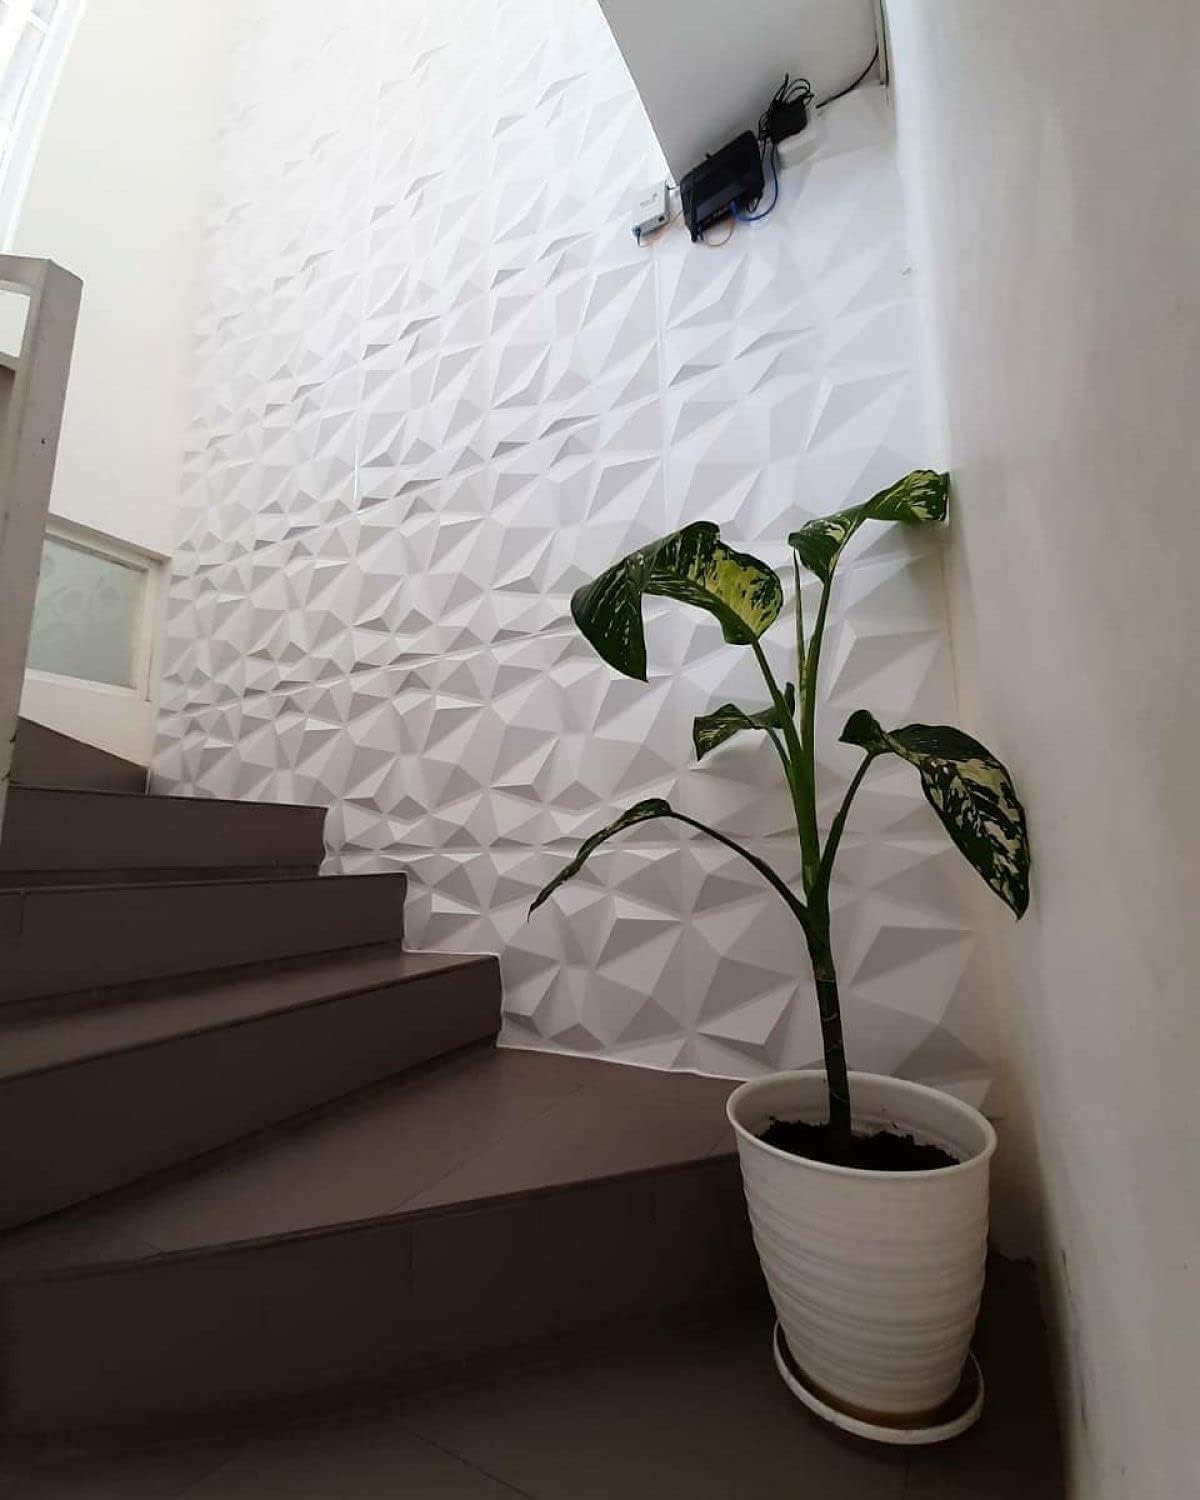 3D Wall Panel PVC Diamond Design, White (VN1NEW-P1)